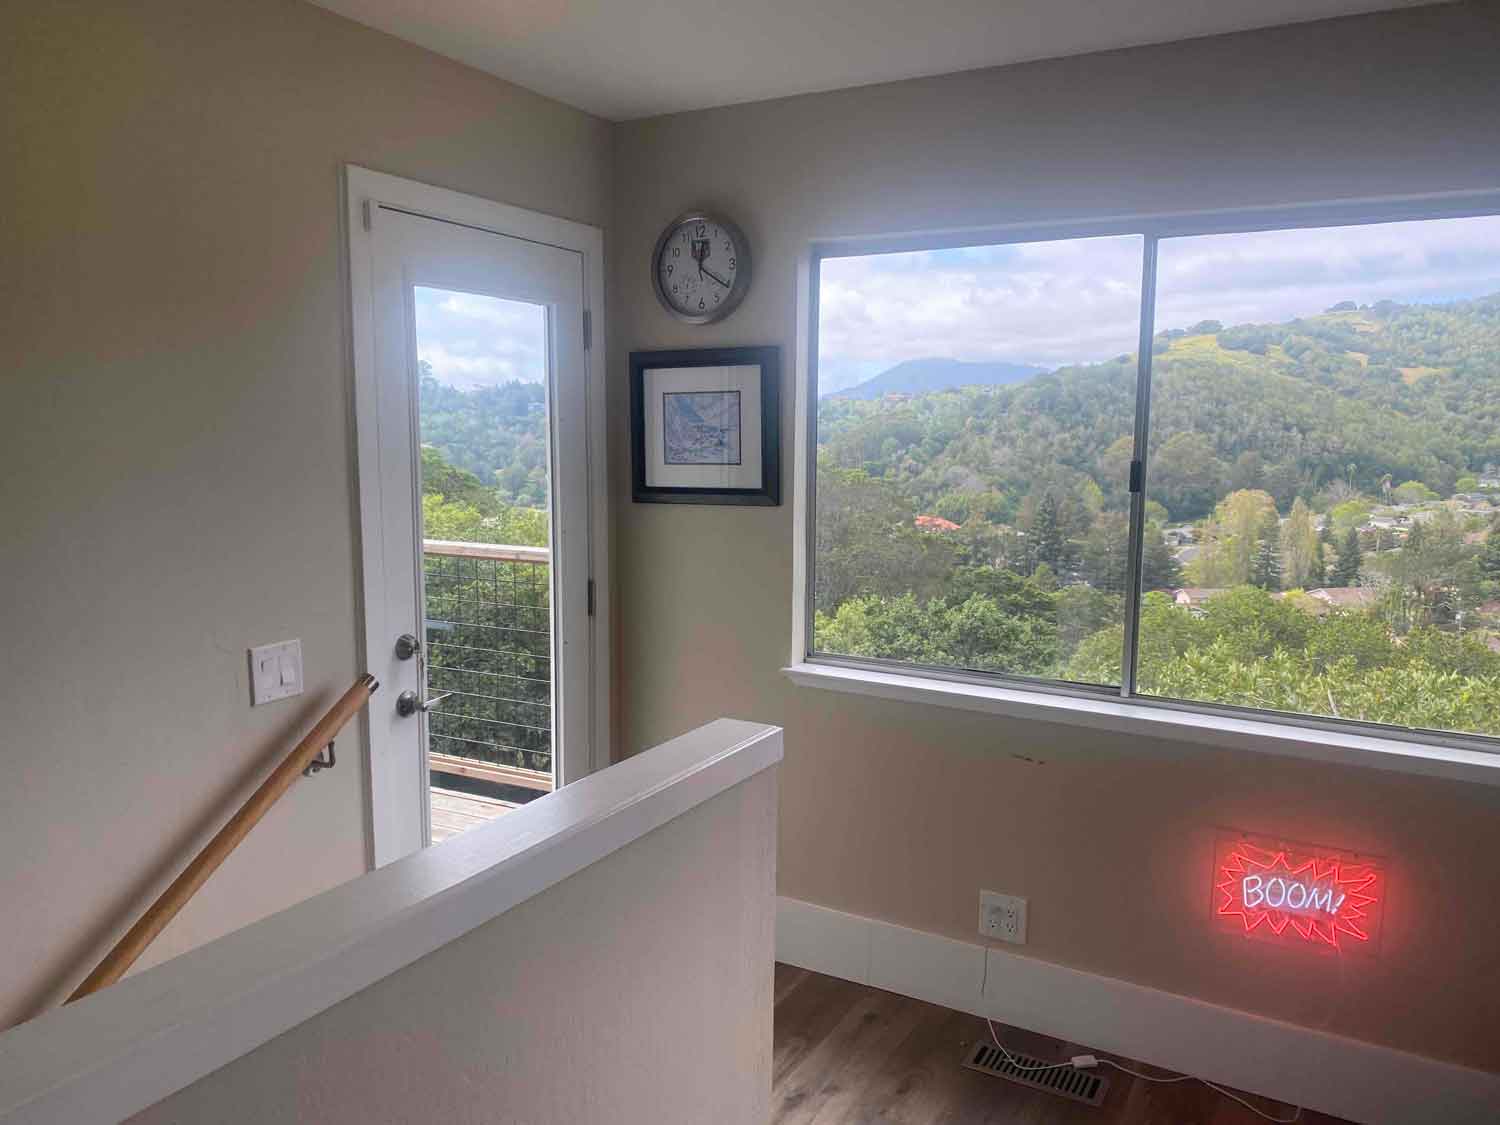 ClimatePro transforms windows all over Marin County, from Sausalito to Novato.